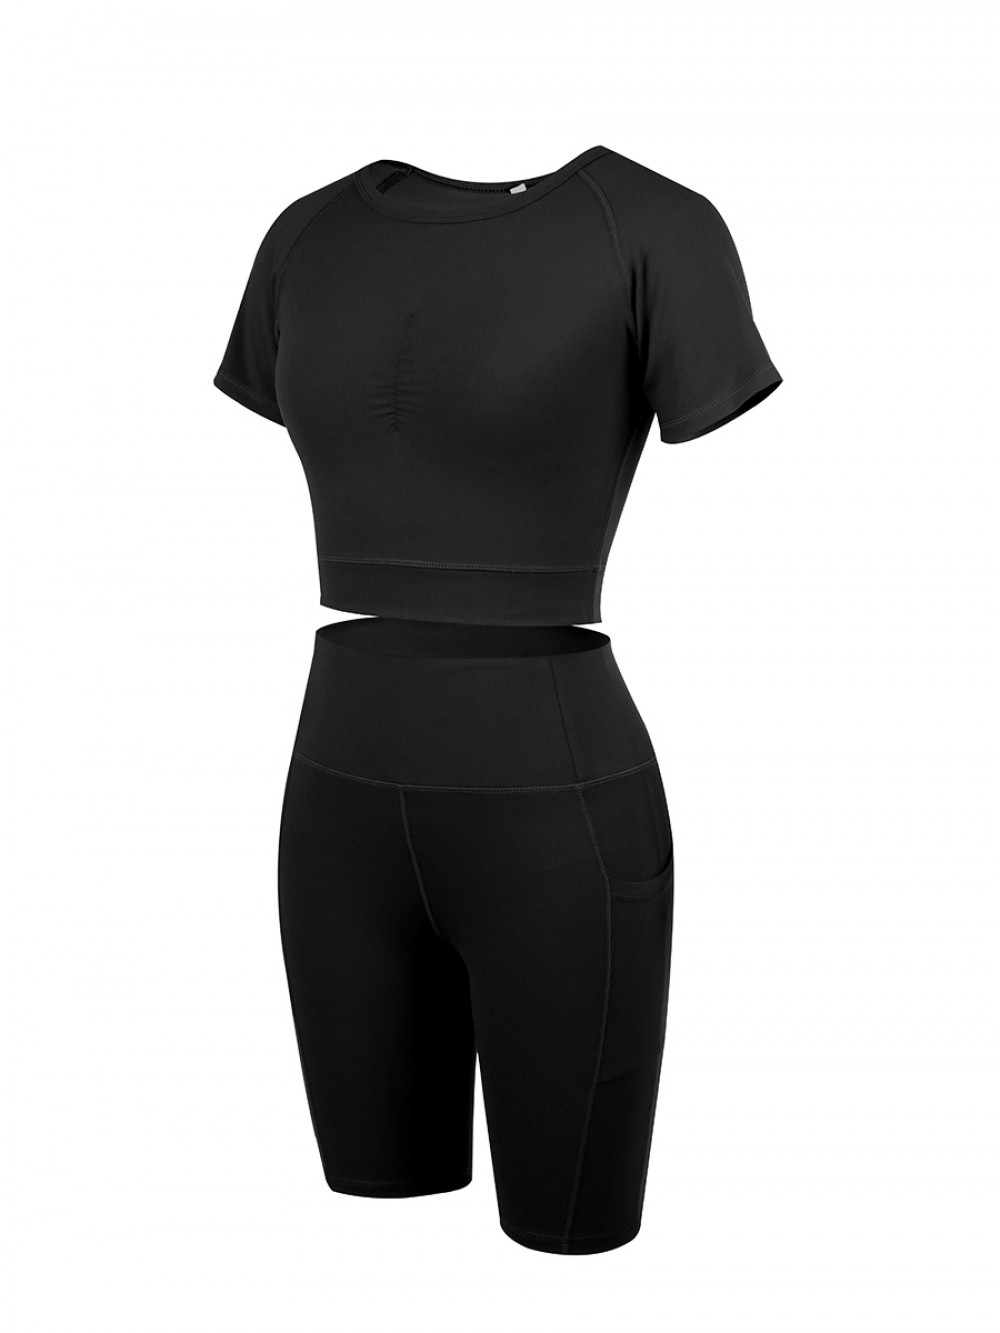 Outdoor Black Raglan Sleeve Top High Waist Shorts Preventing